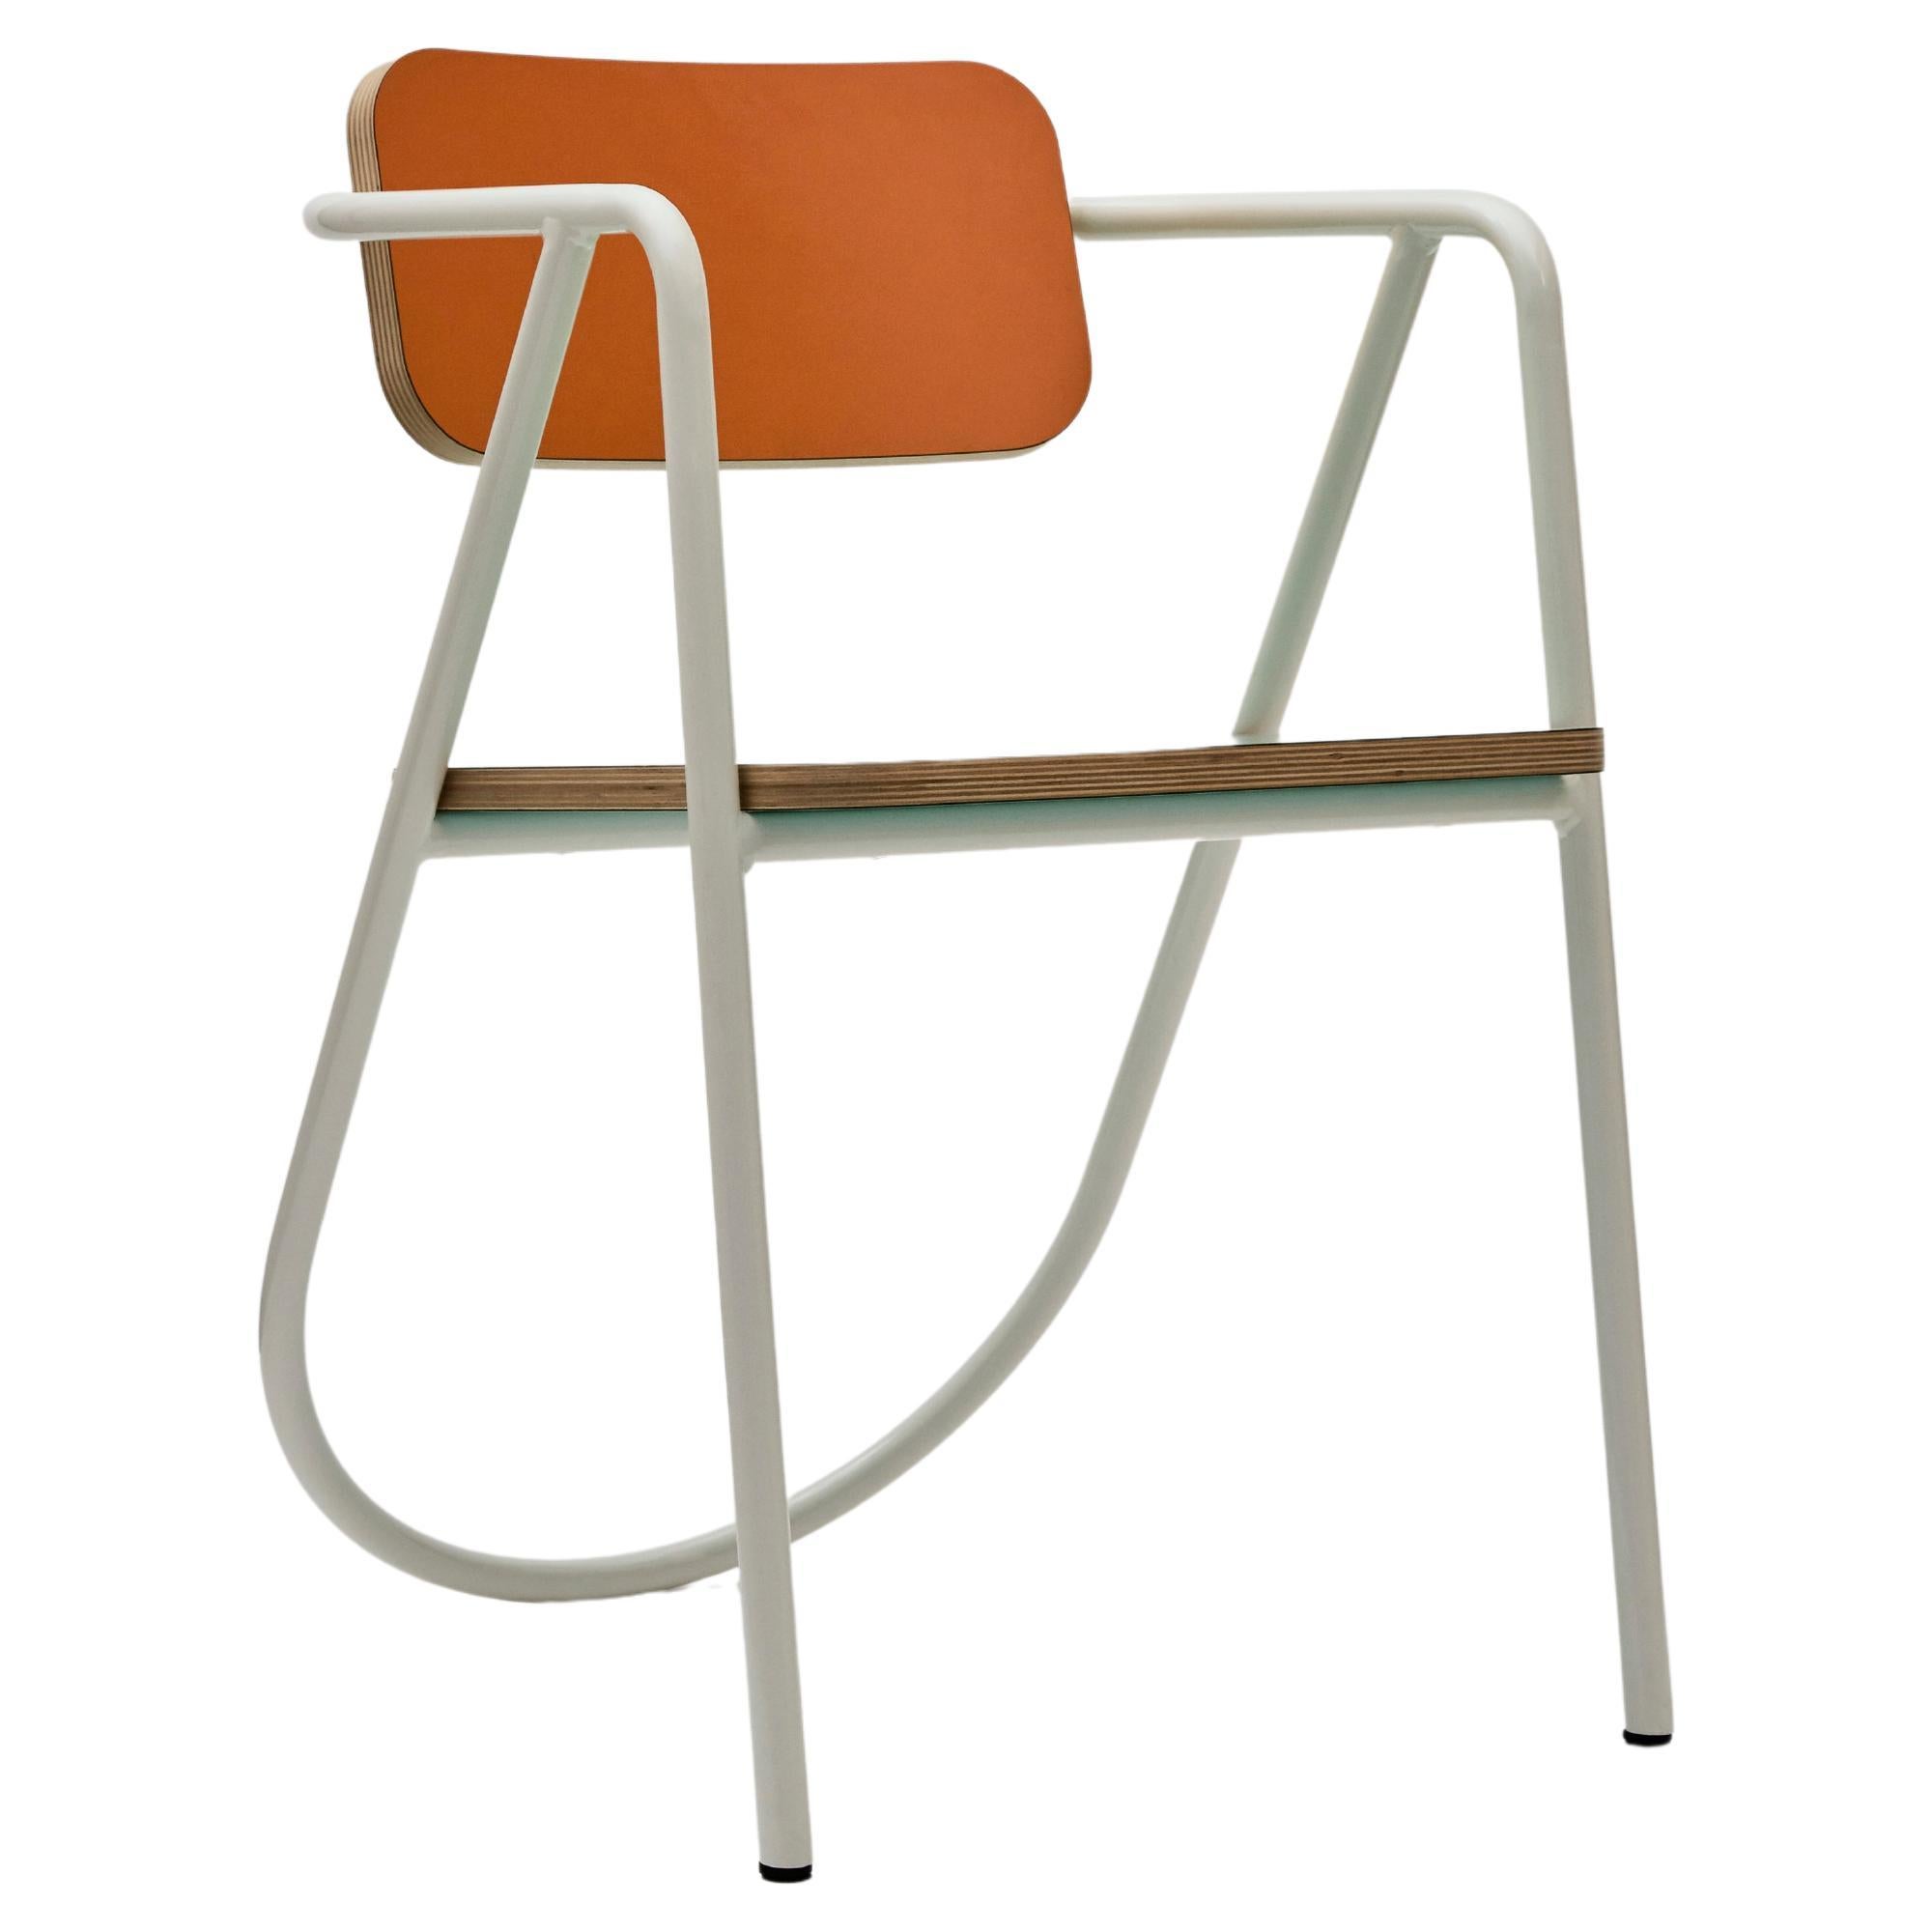 La Misciù Chair, White, Teal & Orange For Sale